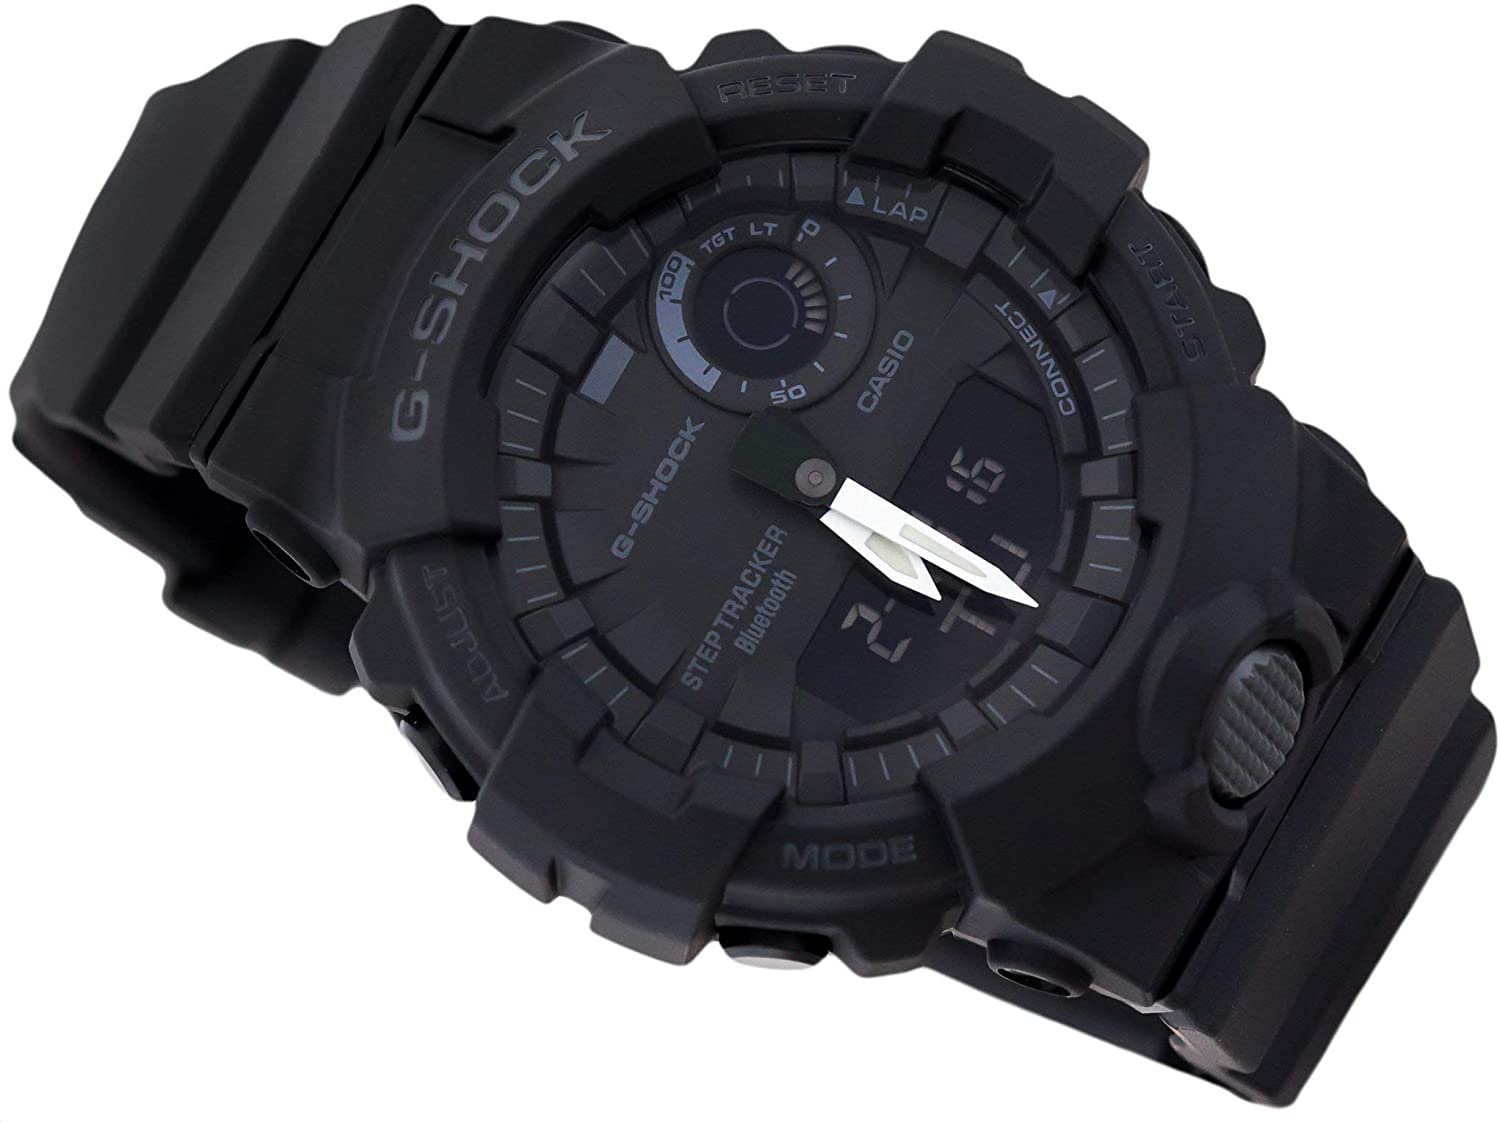 Casio G-Shock Men's GBA800-1A Black One Size